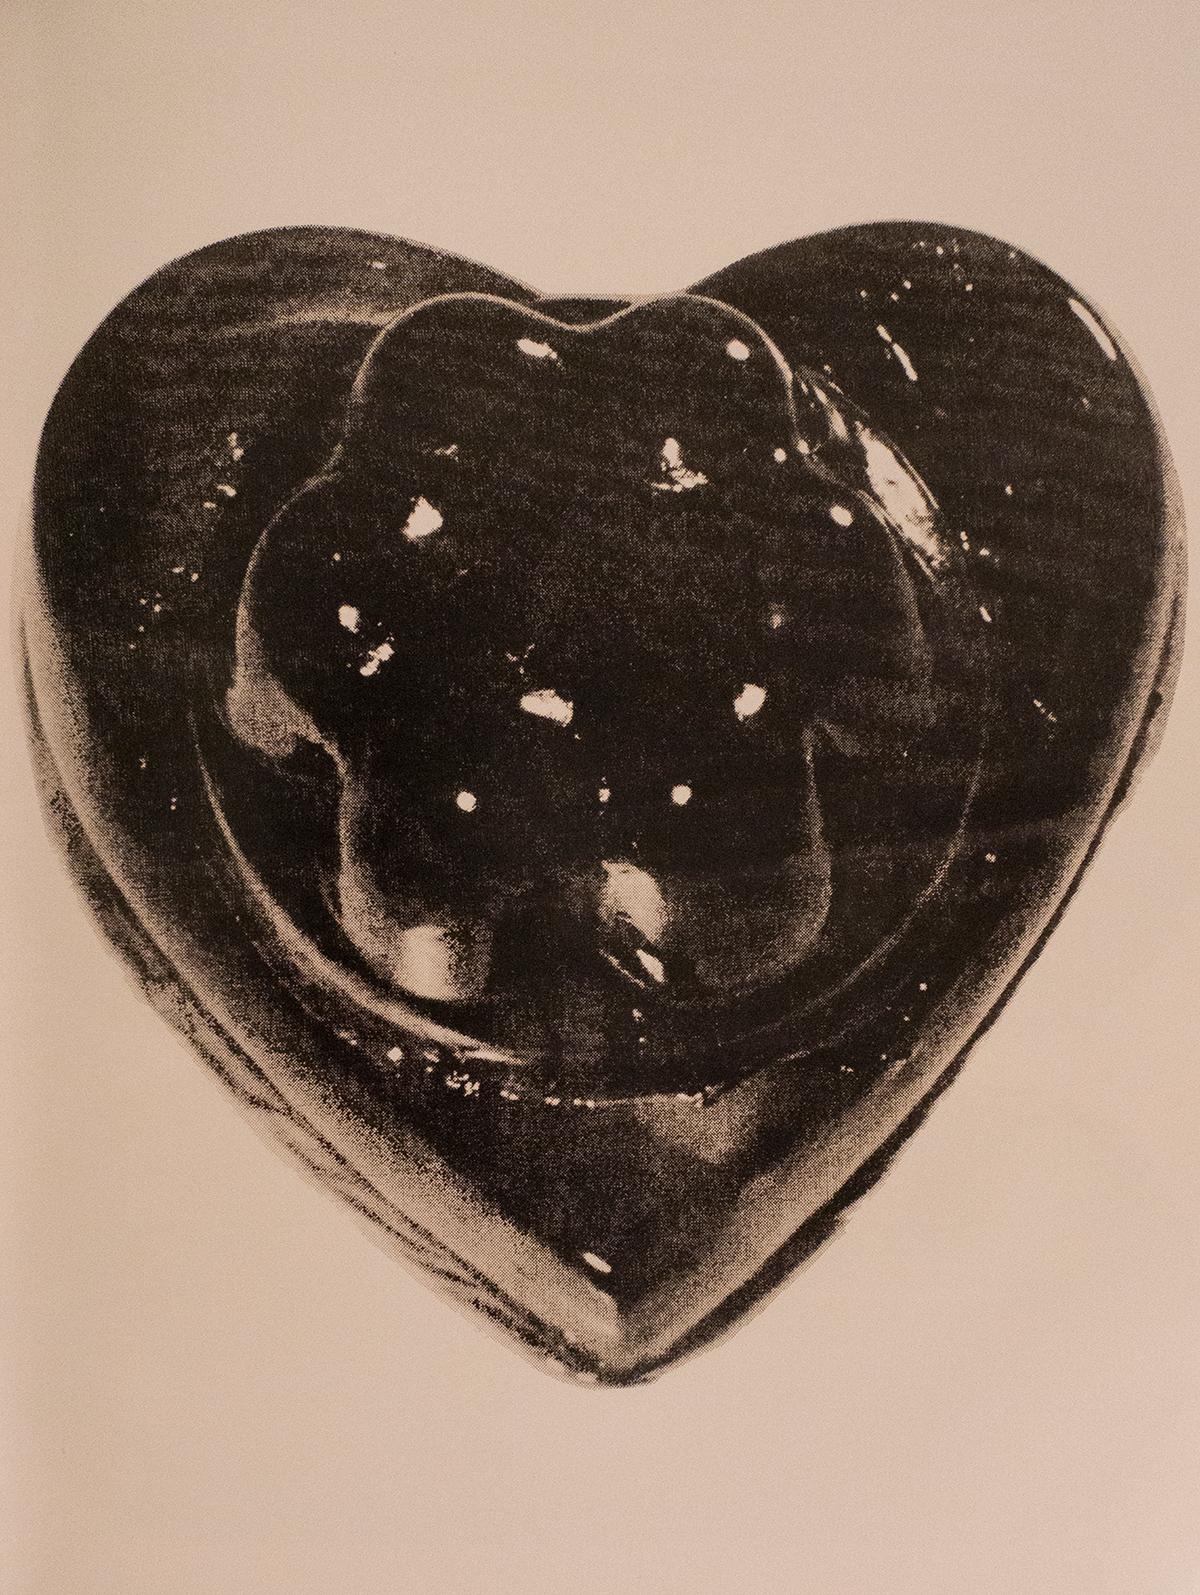 Black Jello Heart acrylic print #7/50 - Print by (after) Richard Bernstein